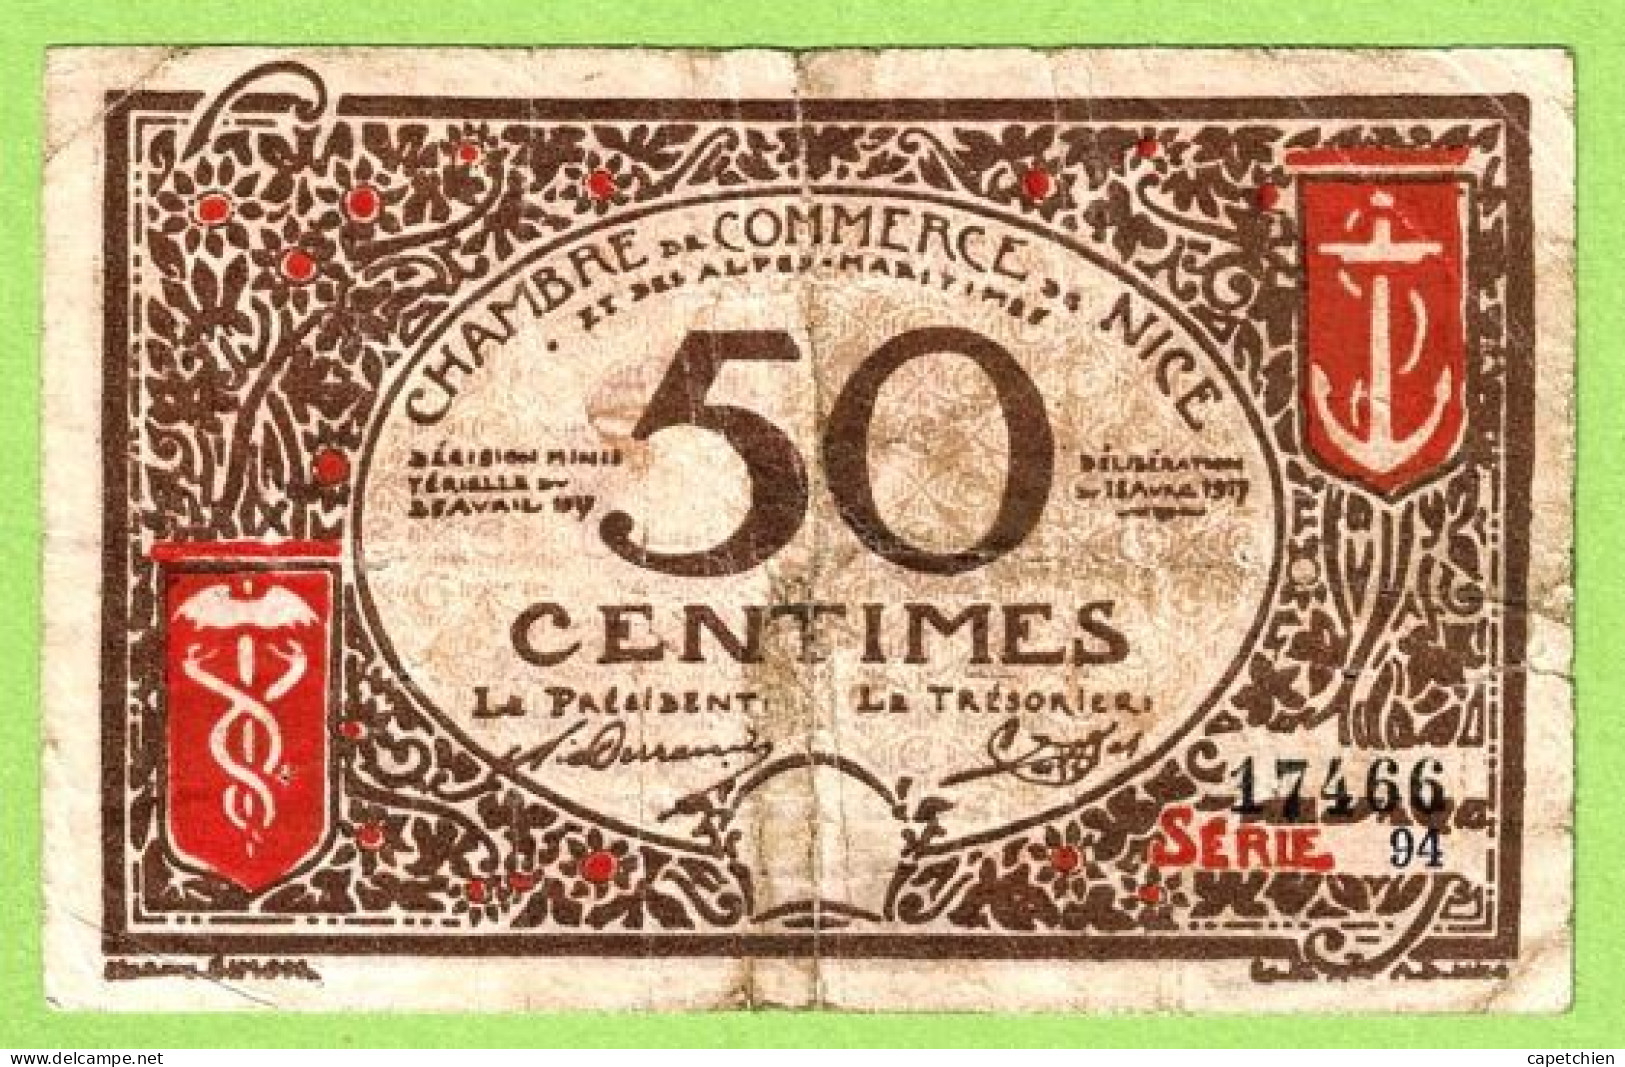 FRANCE / CHAMBRE De COMMERCE / NICE - ALPES MARITIMES / 50 CENTIMES / 1917 - 1921 SURCHARGE 1920 - 1921 / N° 17466 - Camera Di Commercio